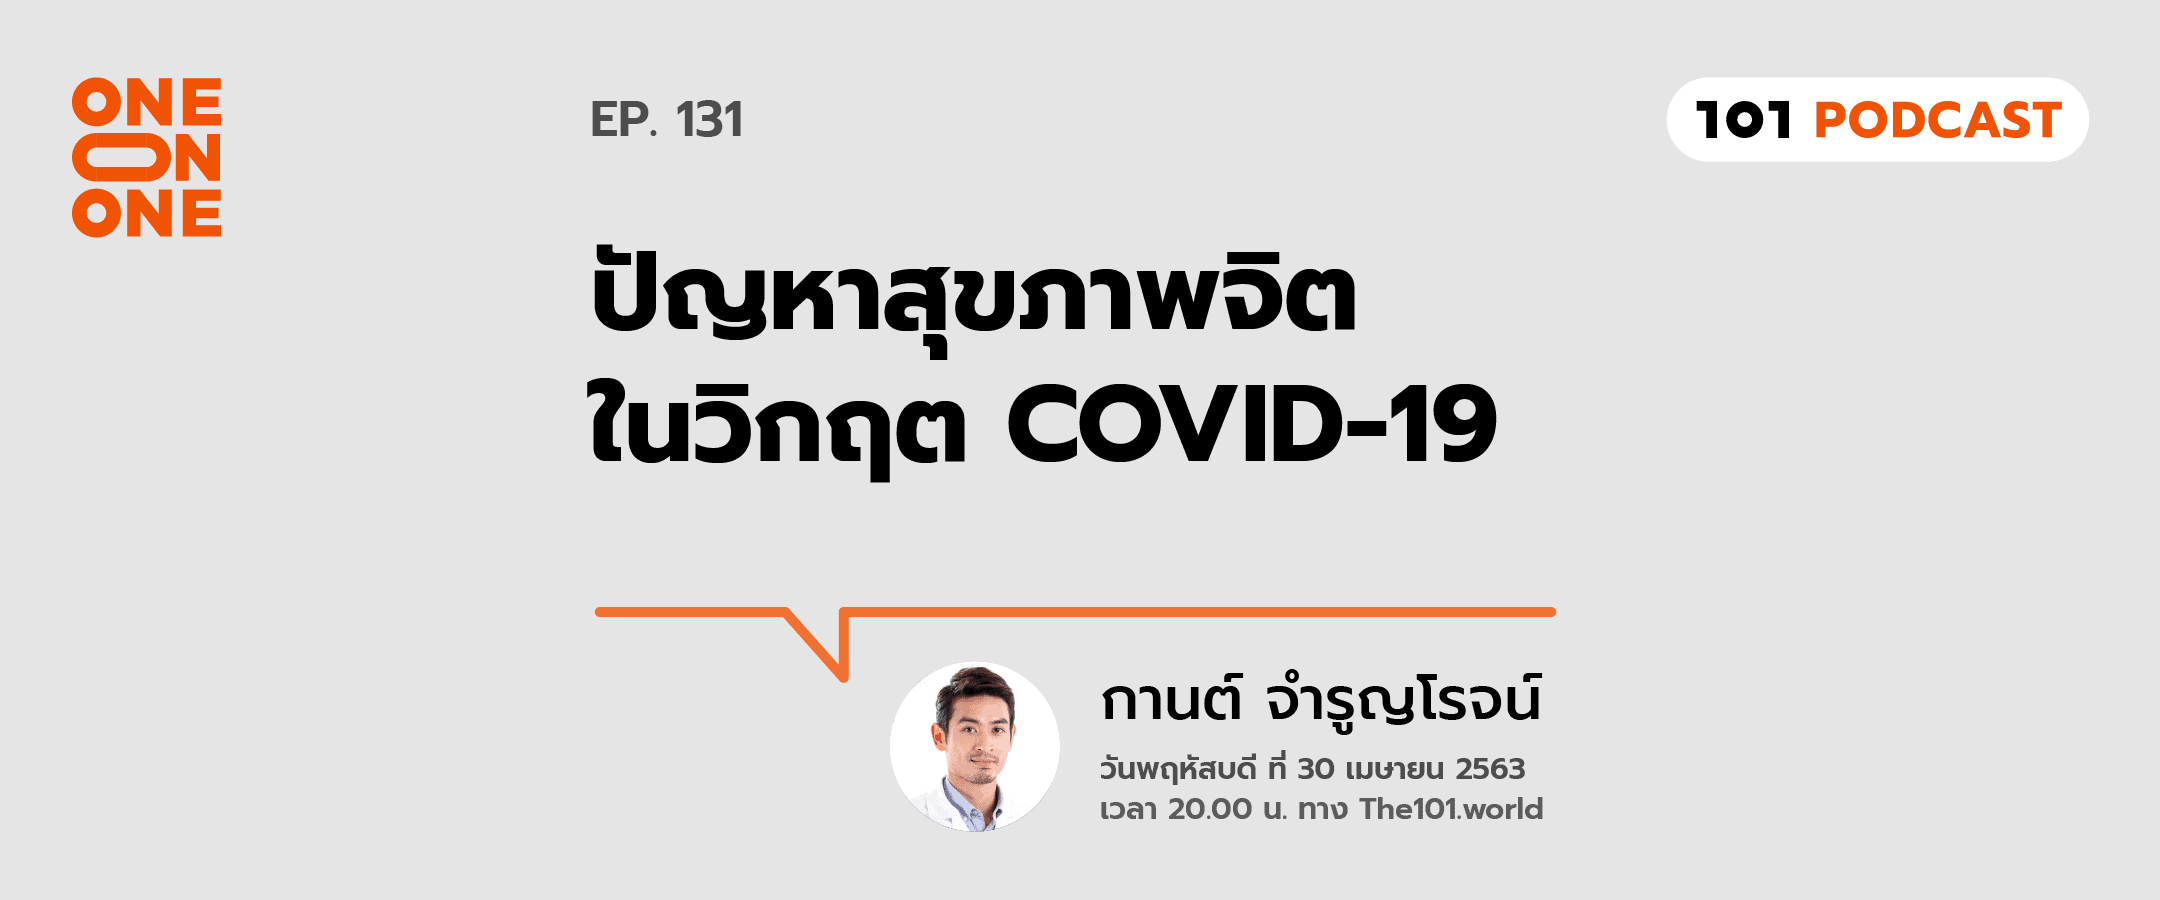 101 One-On-One Ep.131 : "ปัญหาสุขภาพจิต ในวิกฤต COVID-19"